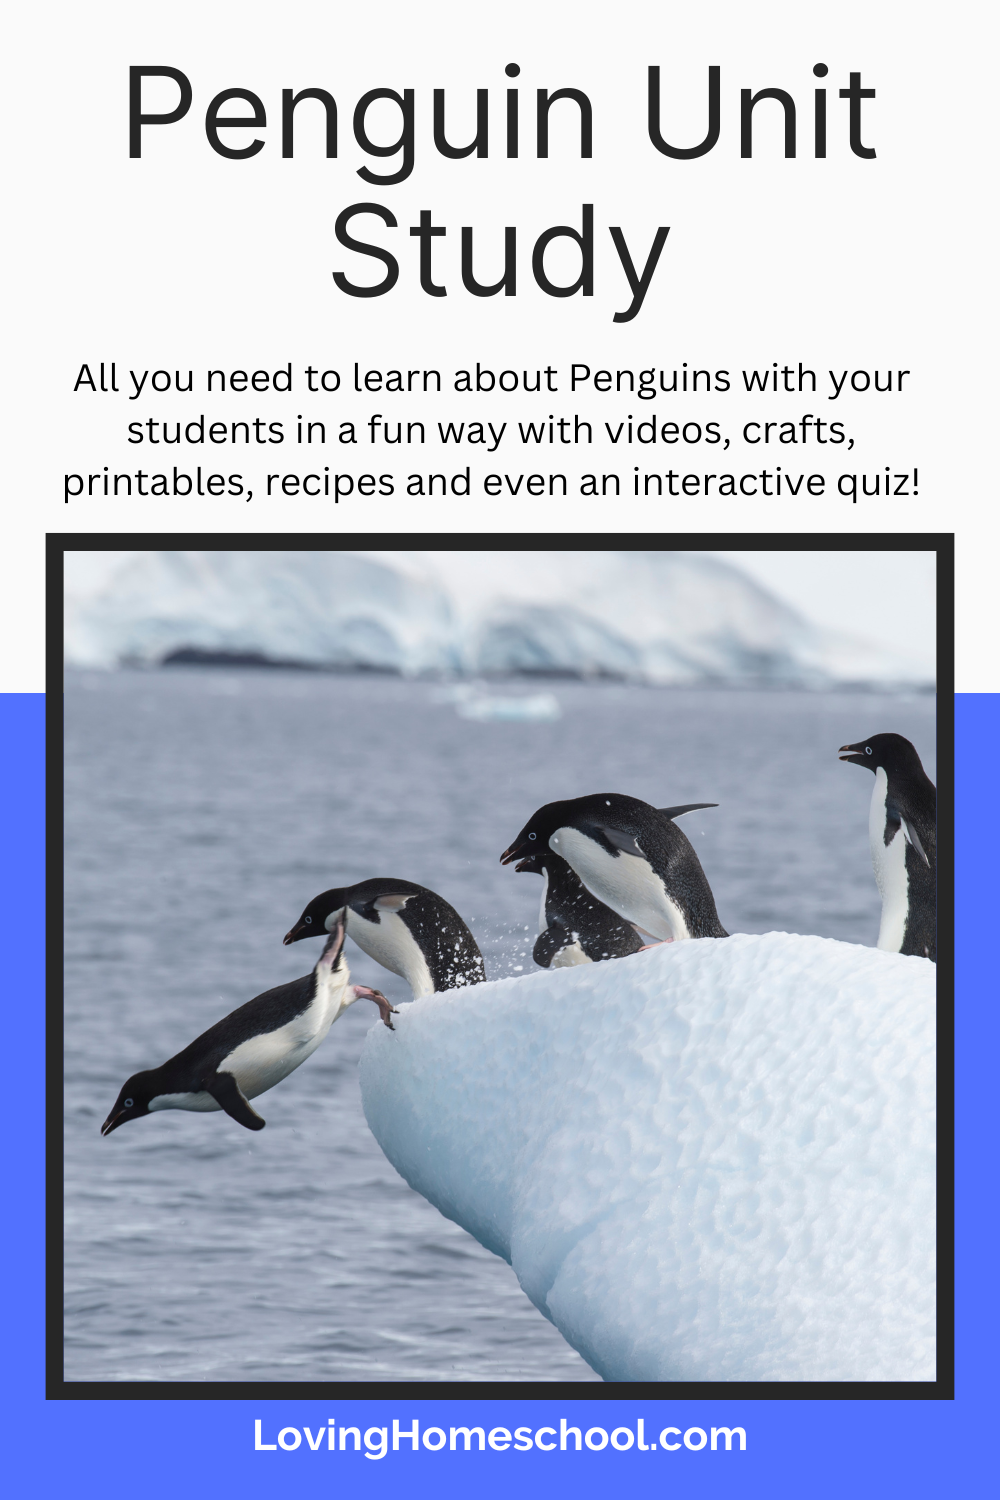 Penguin Unit Study Pinterest Pin